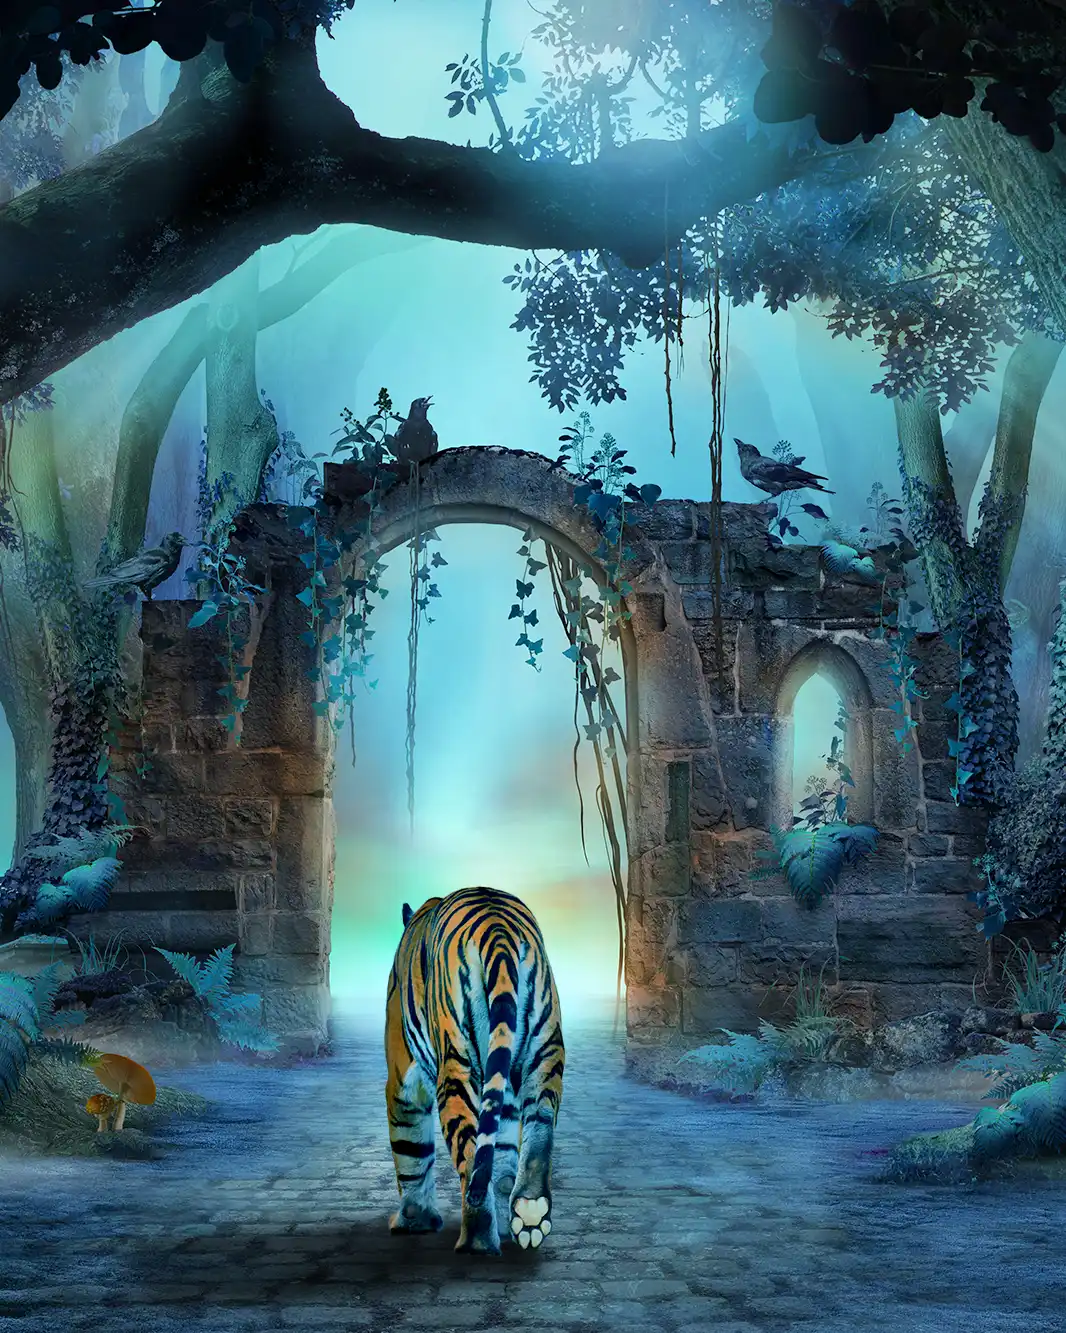 A tiger walking away through an arch in a jungle